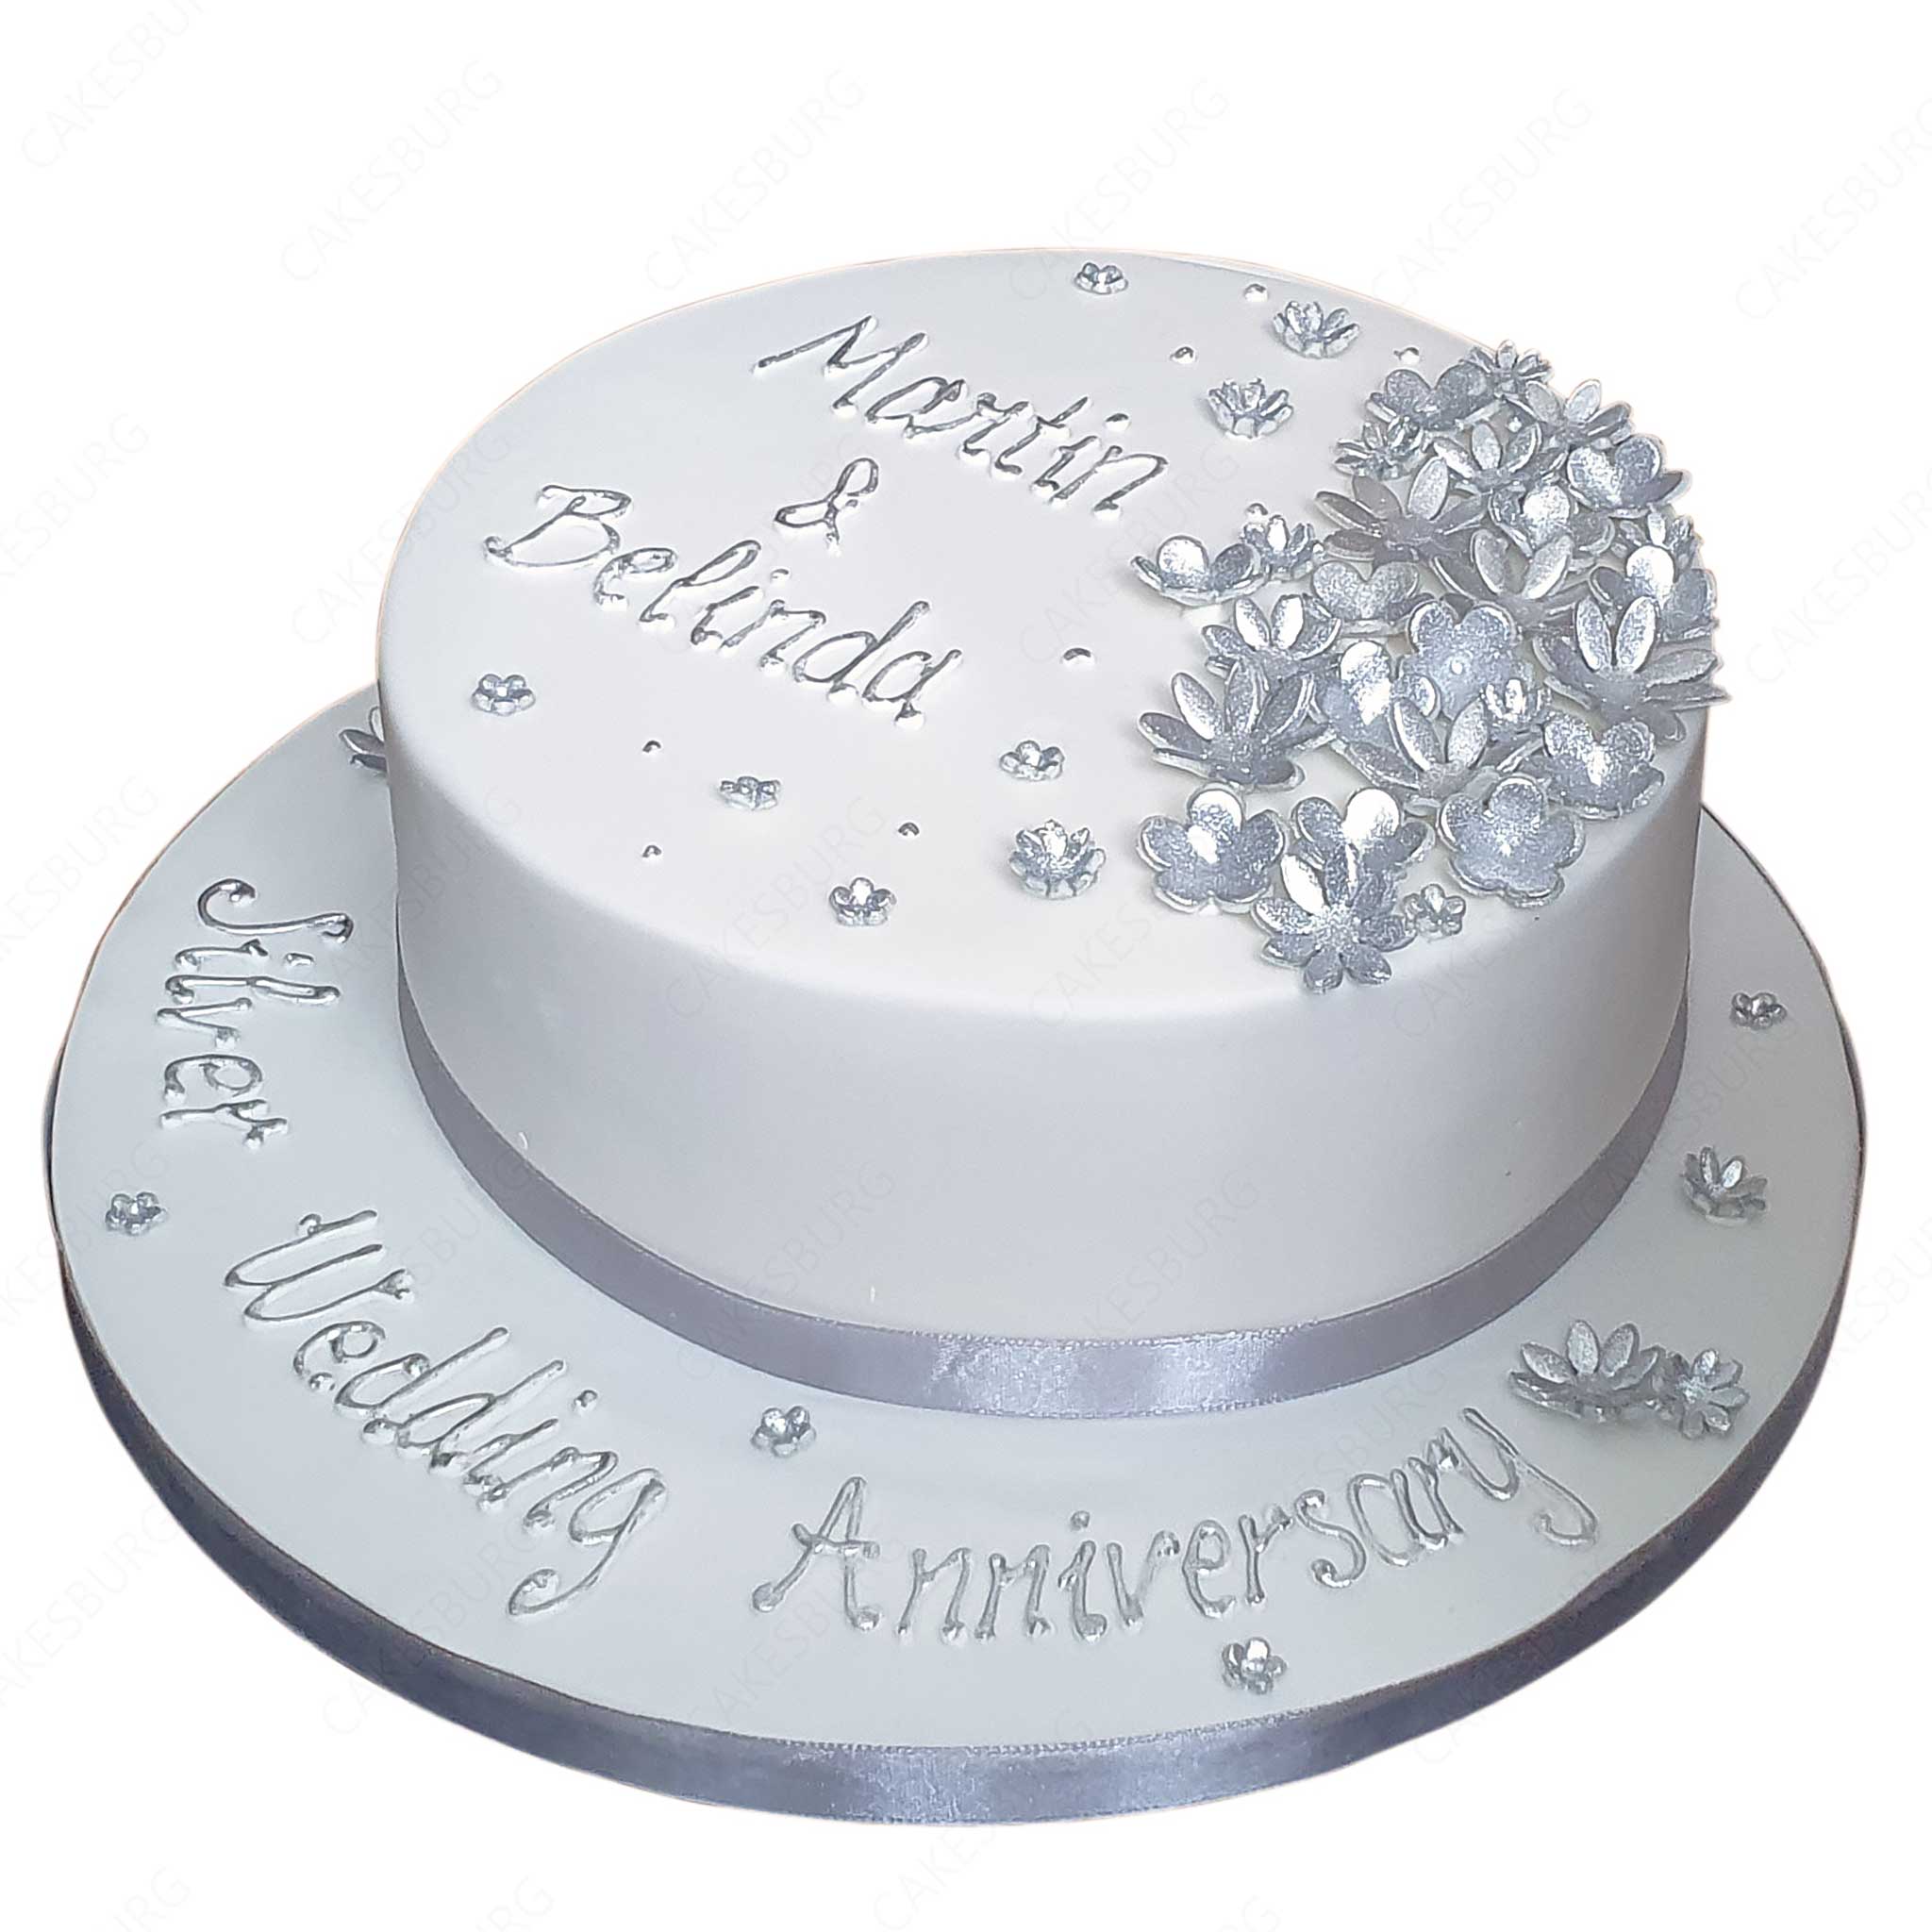 25th Wedding Anniversary Cake | Silver wedding annversary ca… | Flickr